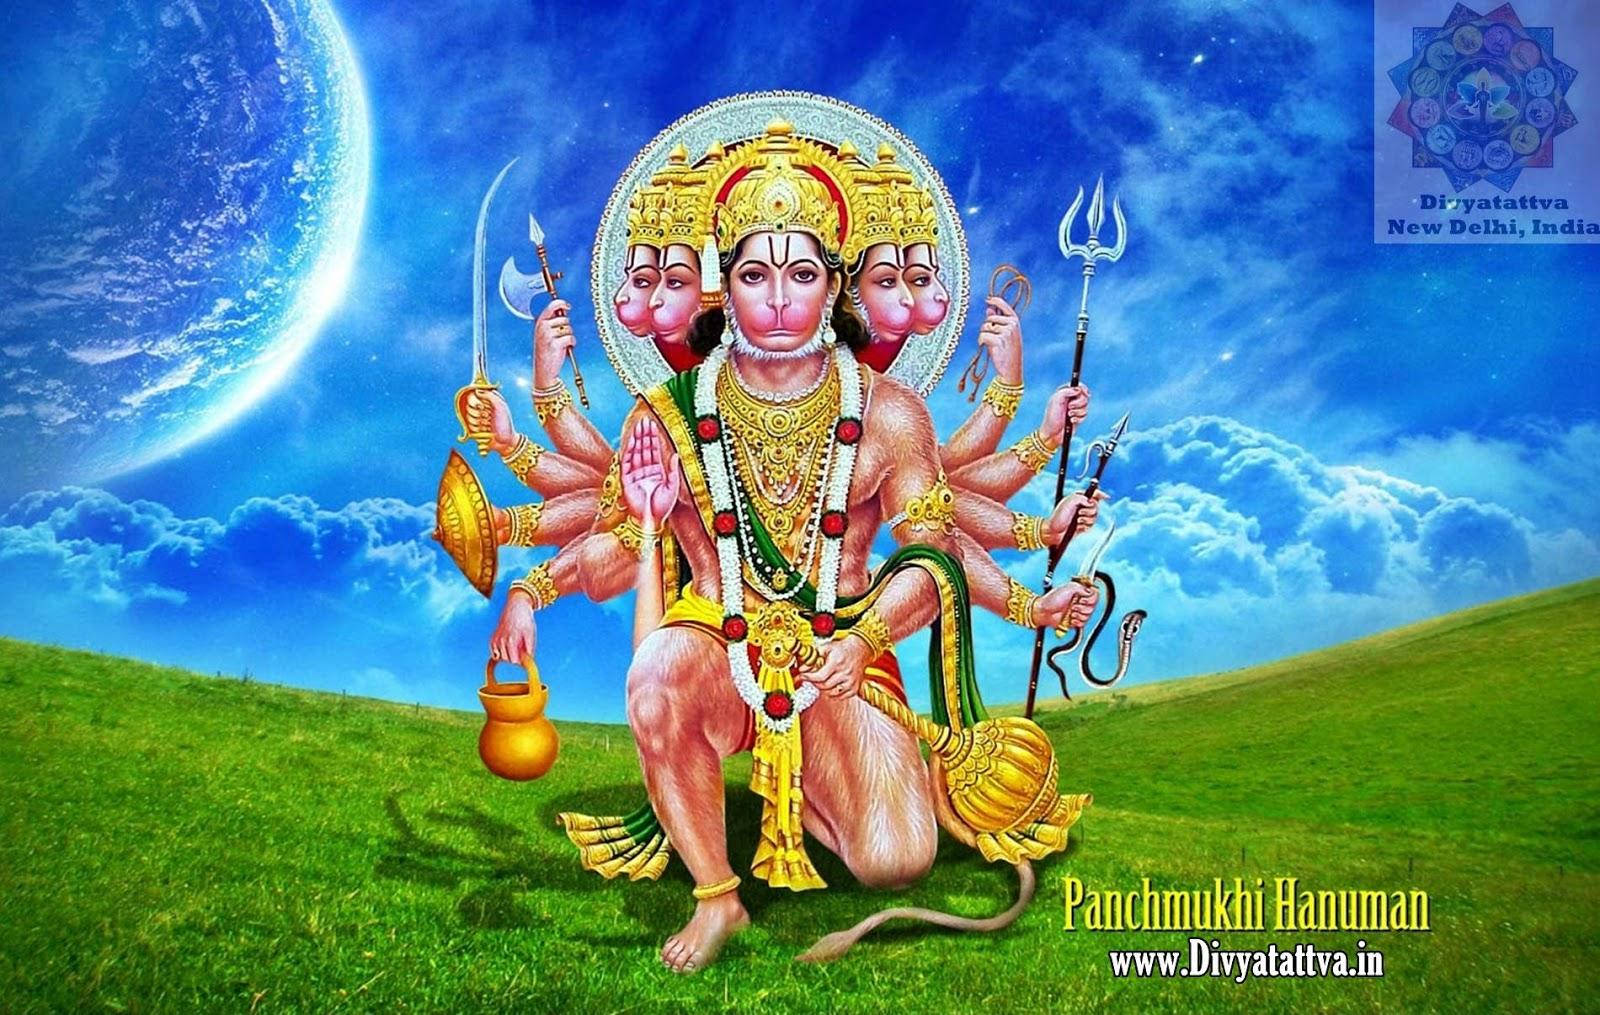 Panchmukhi Hanuman In Grassfield Wallpaper